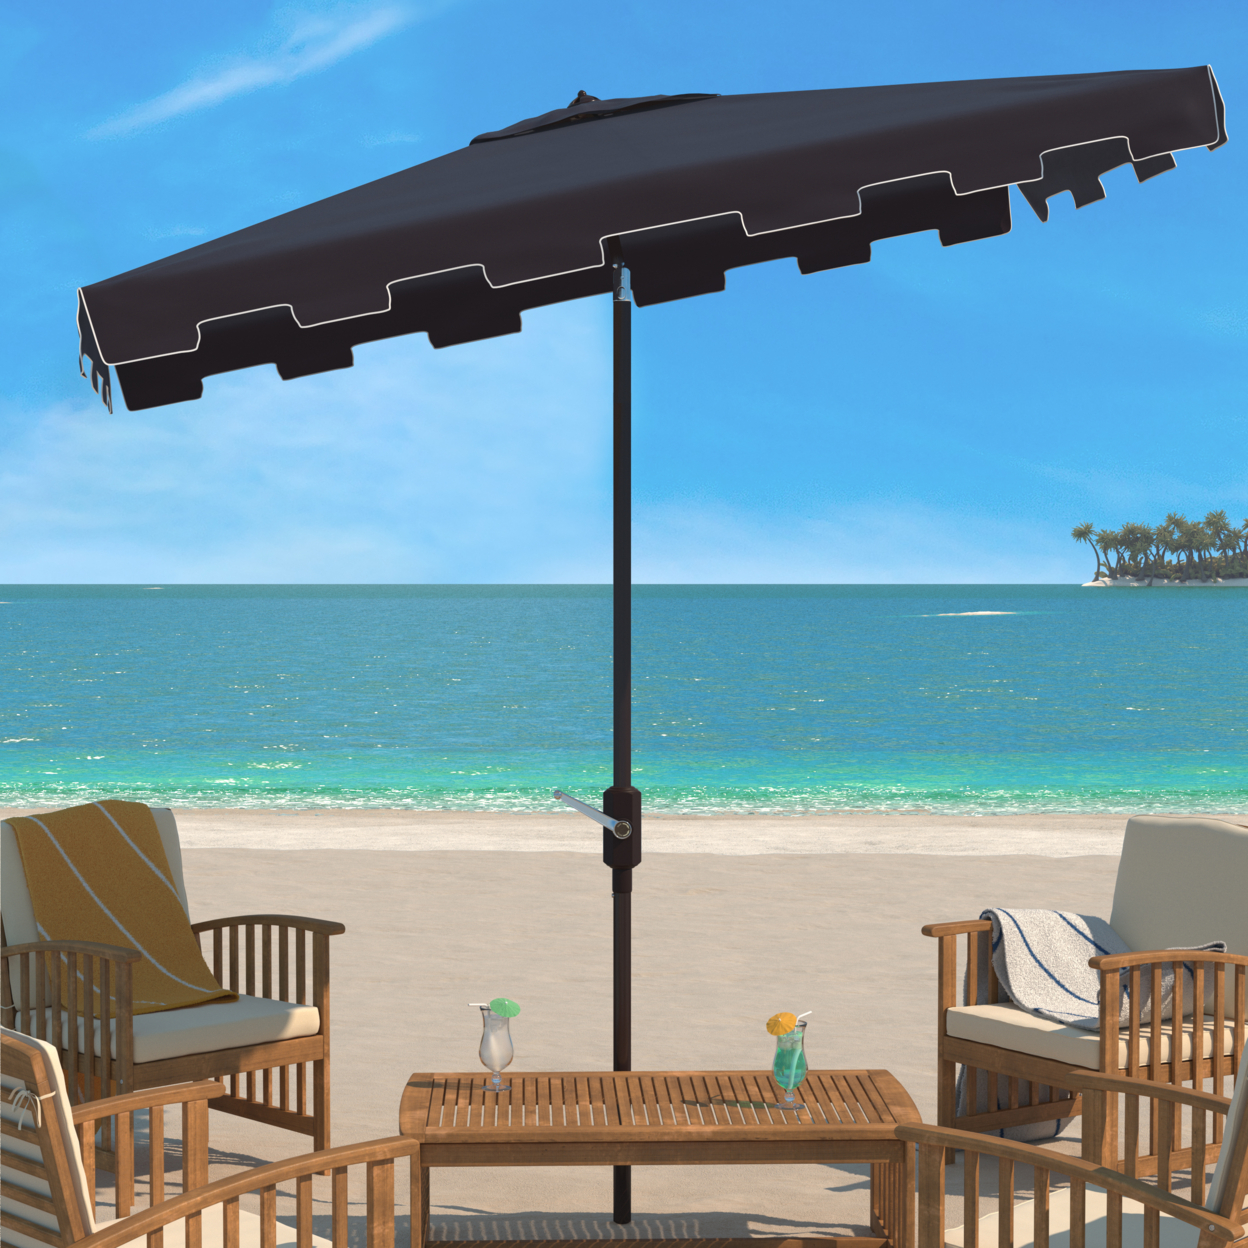 SAFAVIEH Outdoor Collection Zimmerman 6.5 X 10-Foot Rectangle Umbrella Navy/White